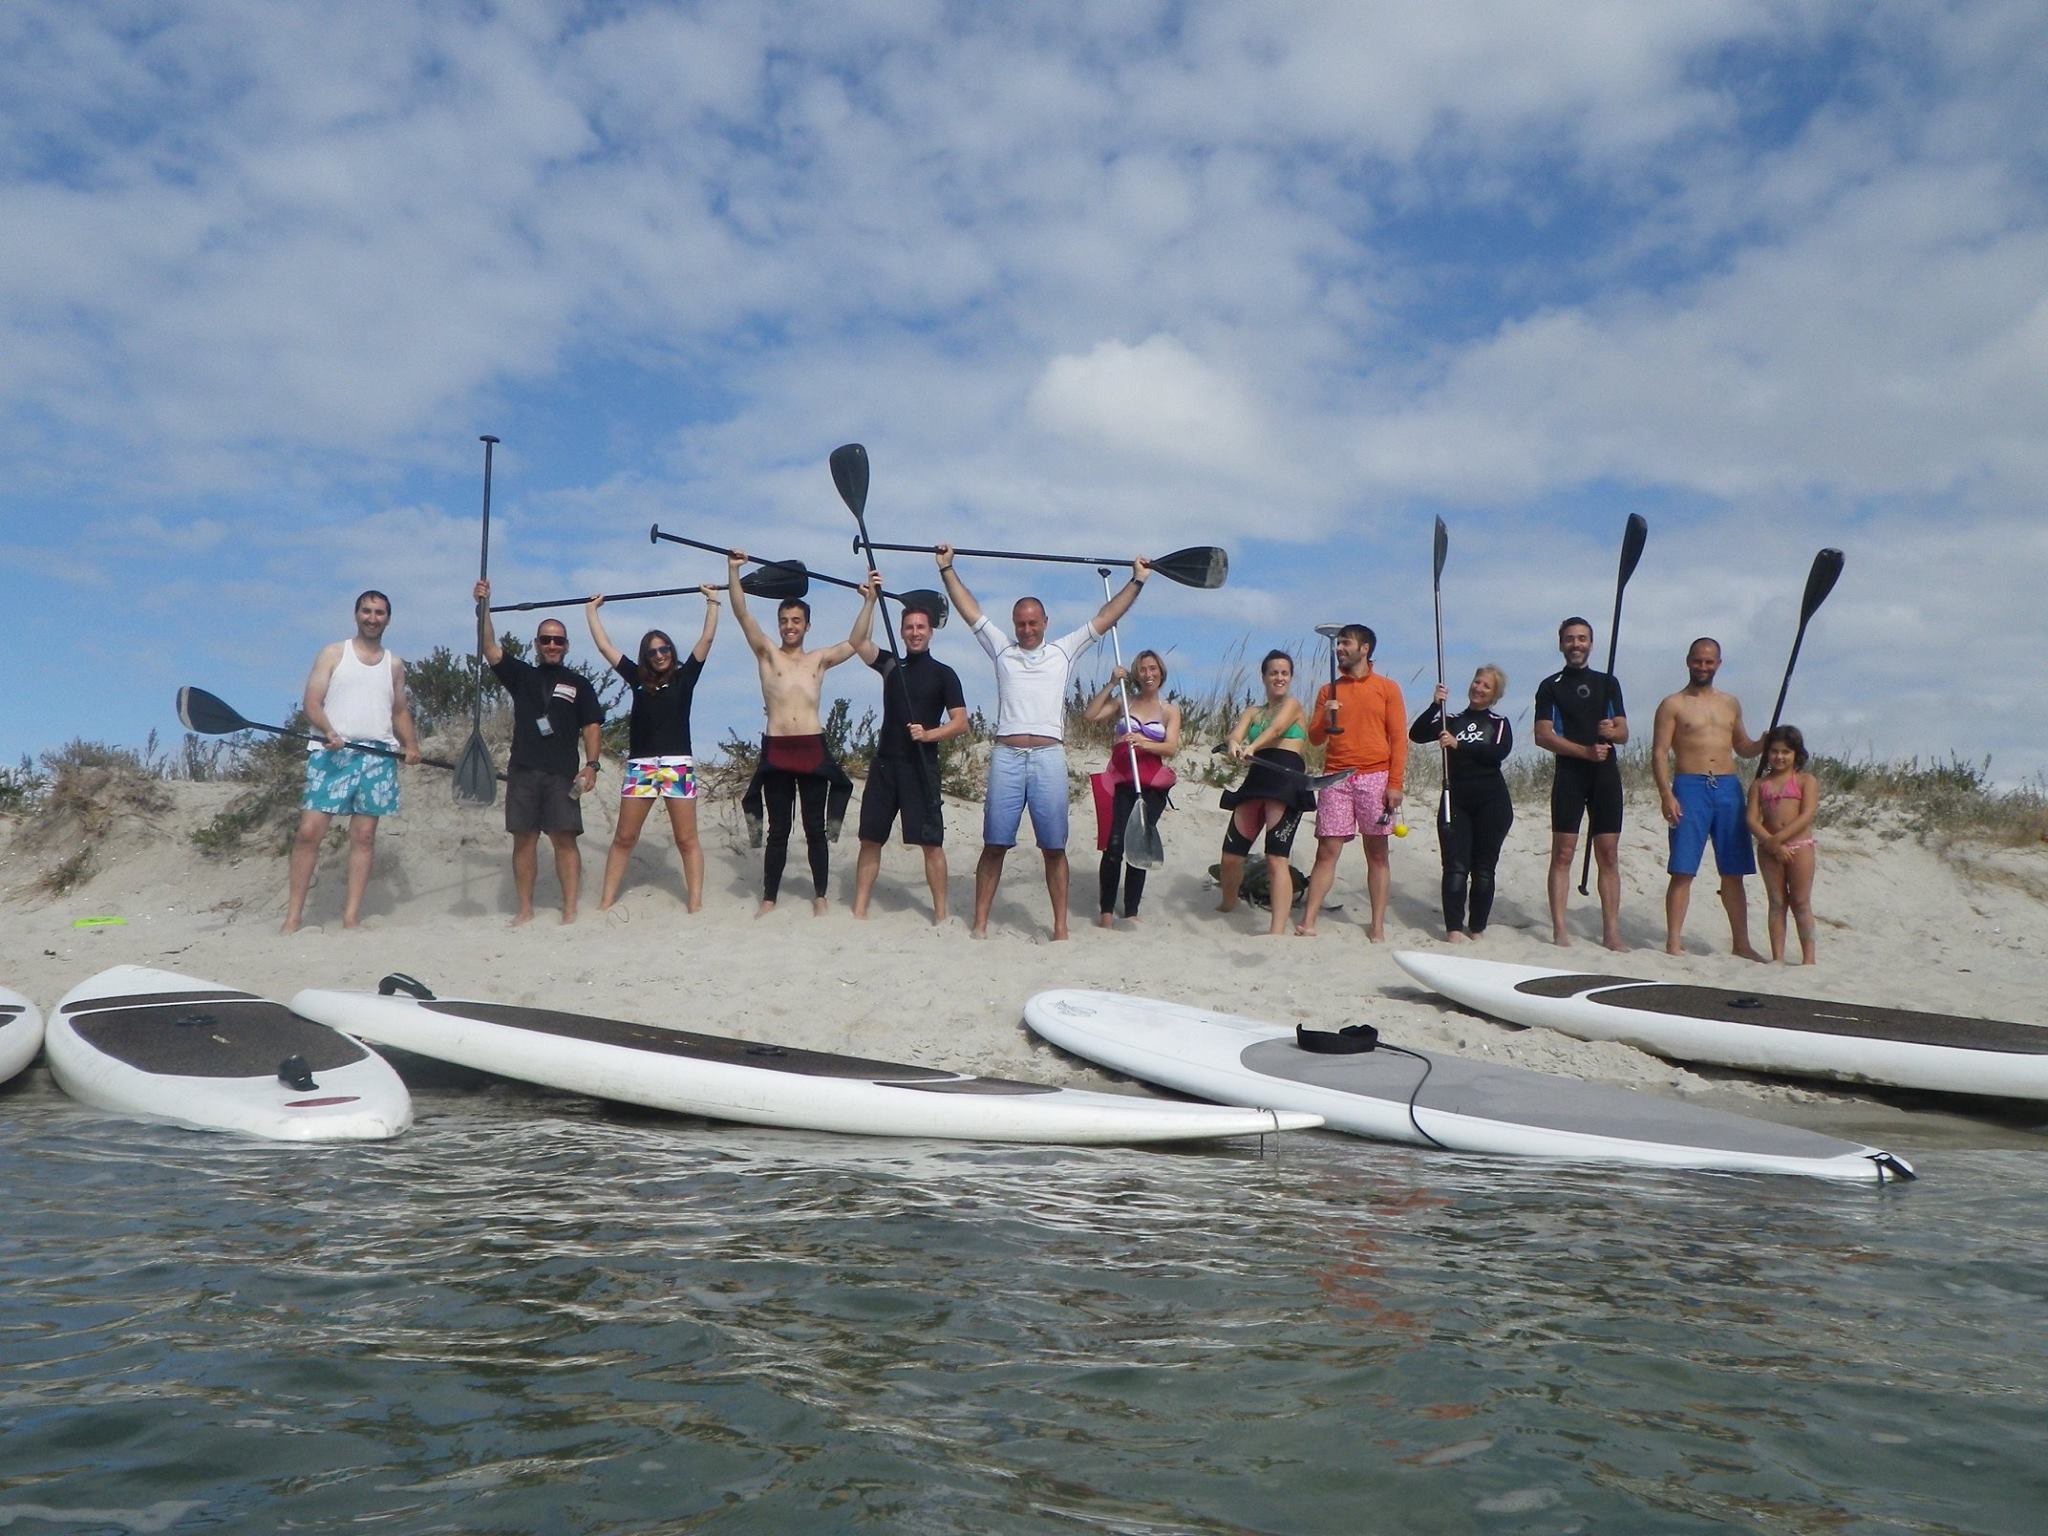 Riactiva - aluguer de kayaks, catamarans, pranchas de SUP e outros materiais nauticos